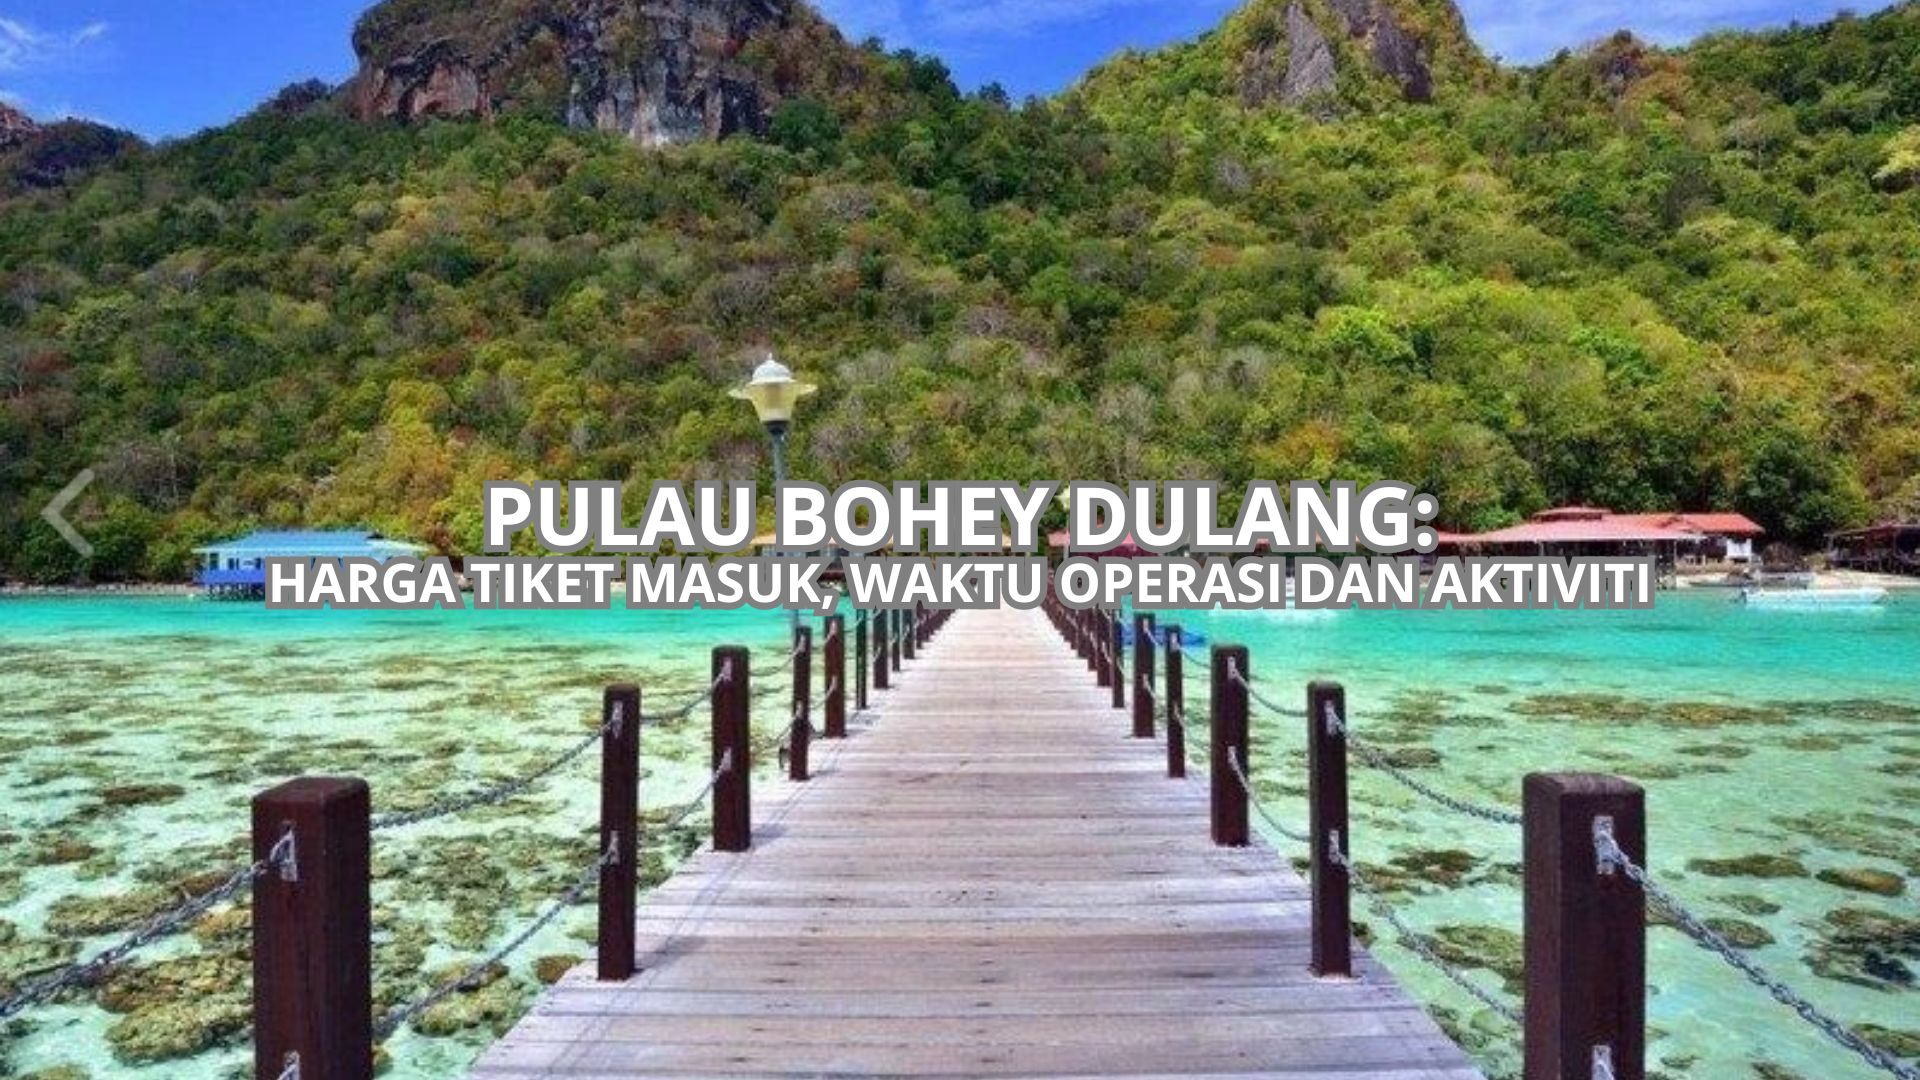 Pulau Bohey Dulang Cover